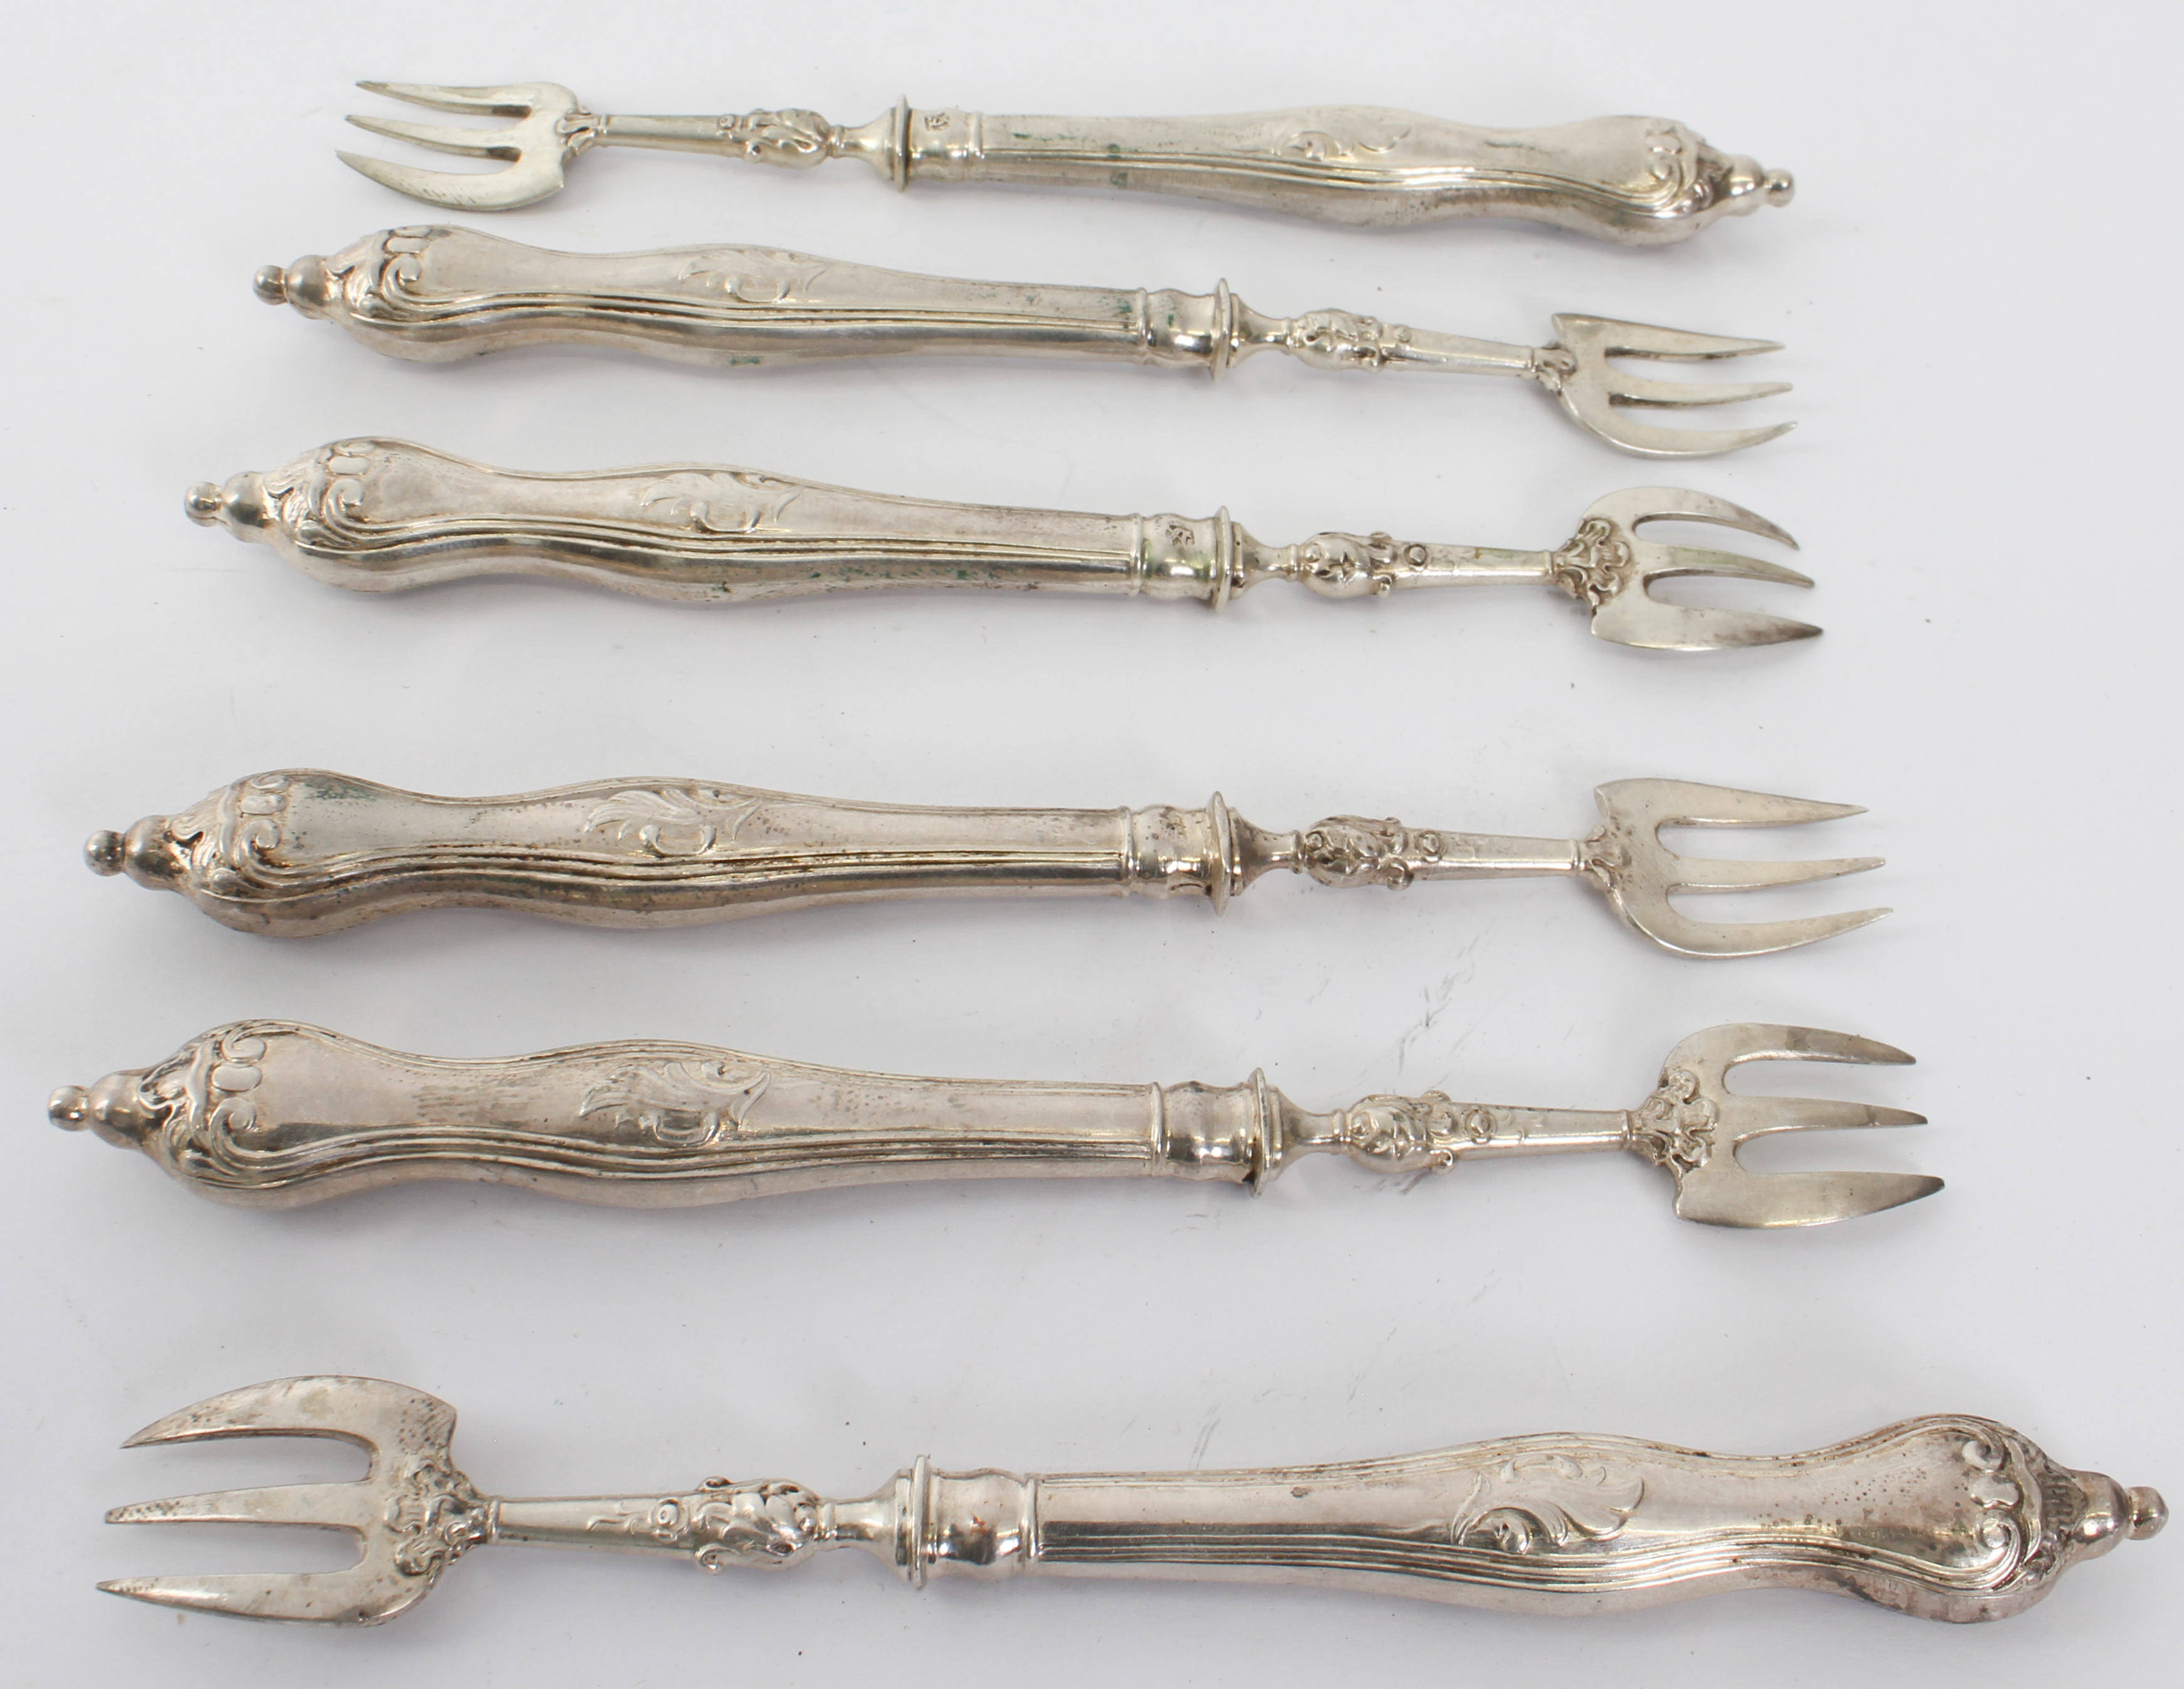 A set of six German silver runcible spoons or sporks - mark of Lazarus Posen, Frankfurt, .800